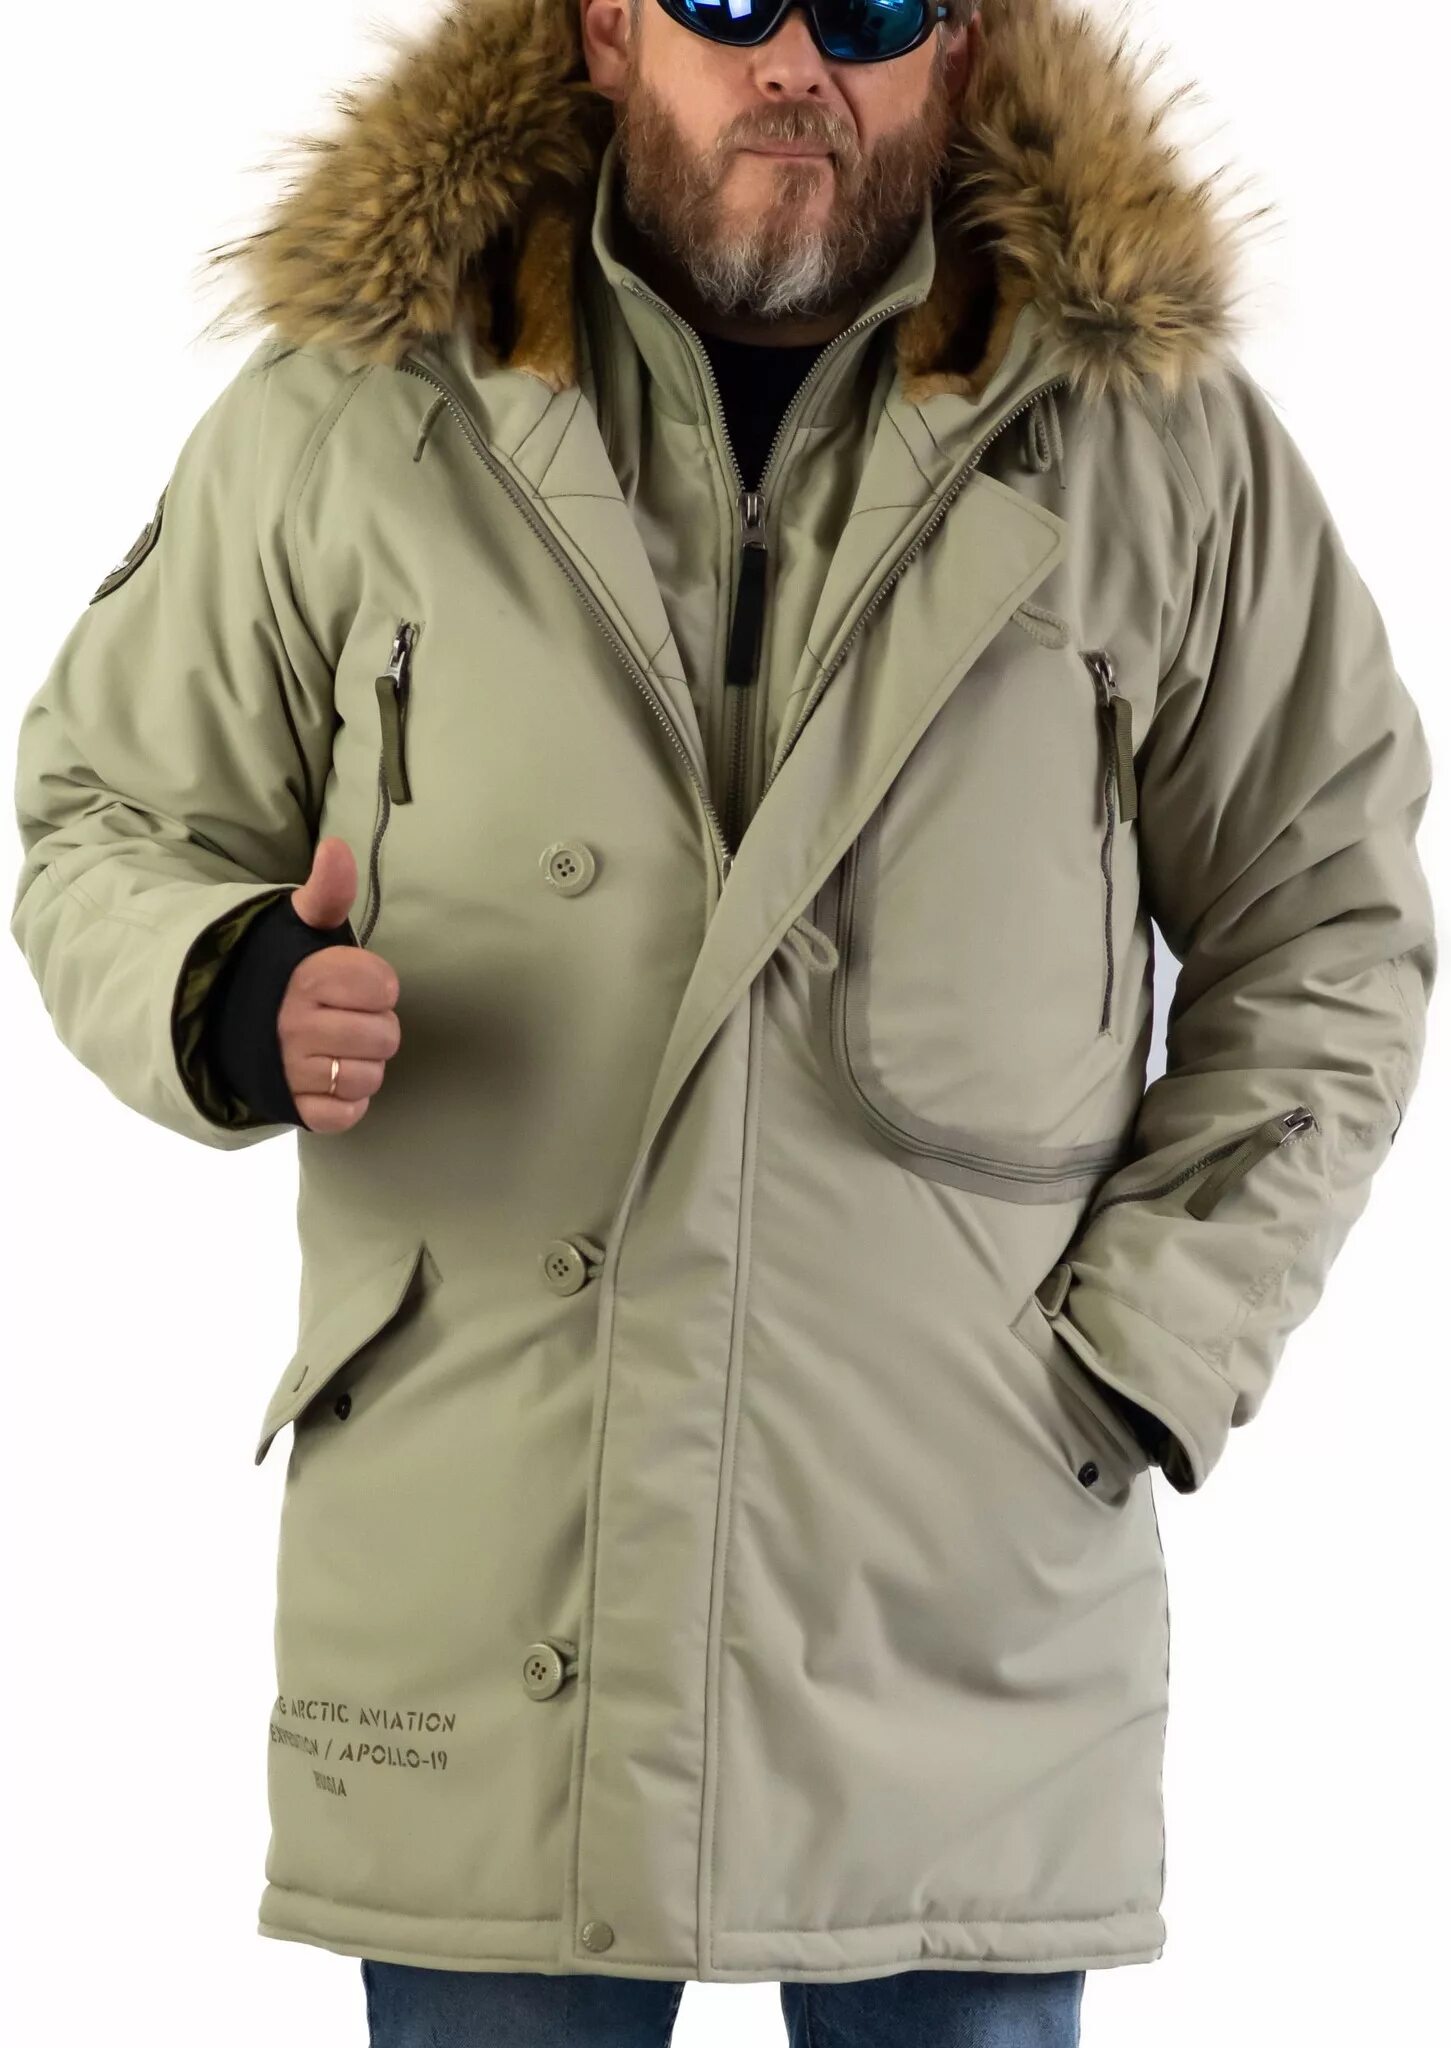 Купить куртку парку мужскую. Куртка Аляска Apolloget мужская. Apolloget Expedition Silver Green/Olive. Куртка Аляска апологет Экспедишн. Парка зимняя мужская Аляска Арктик.